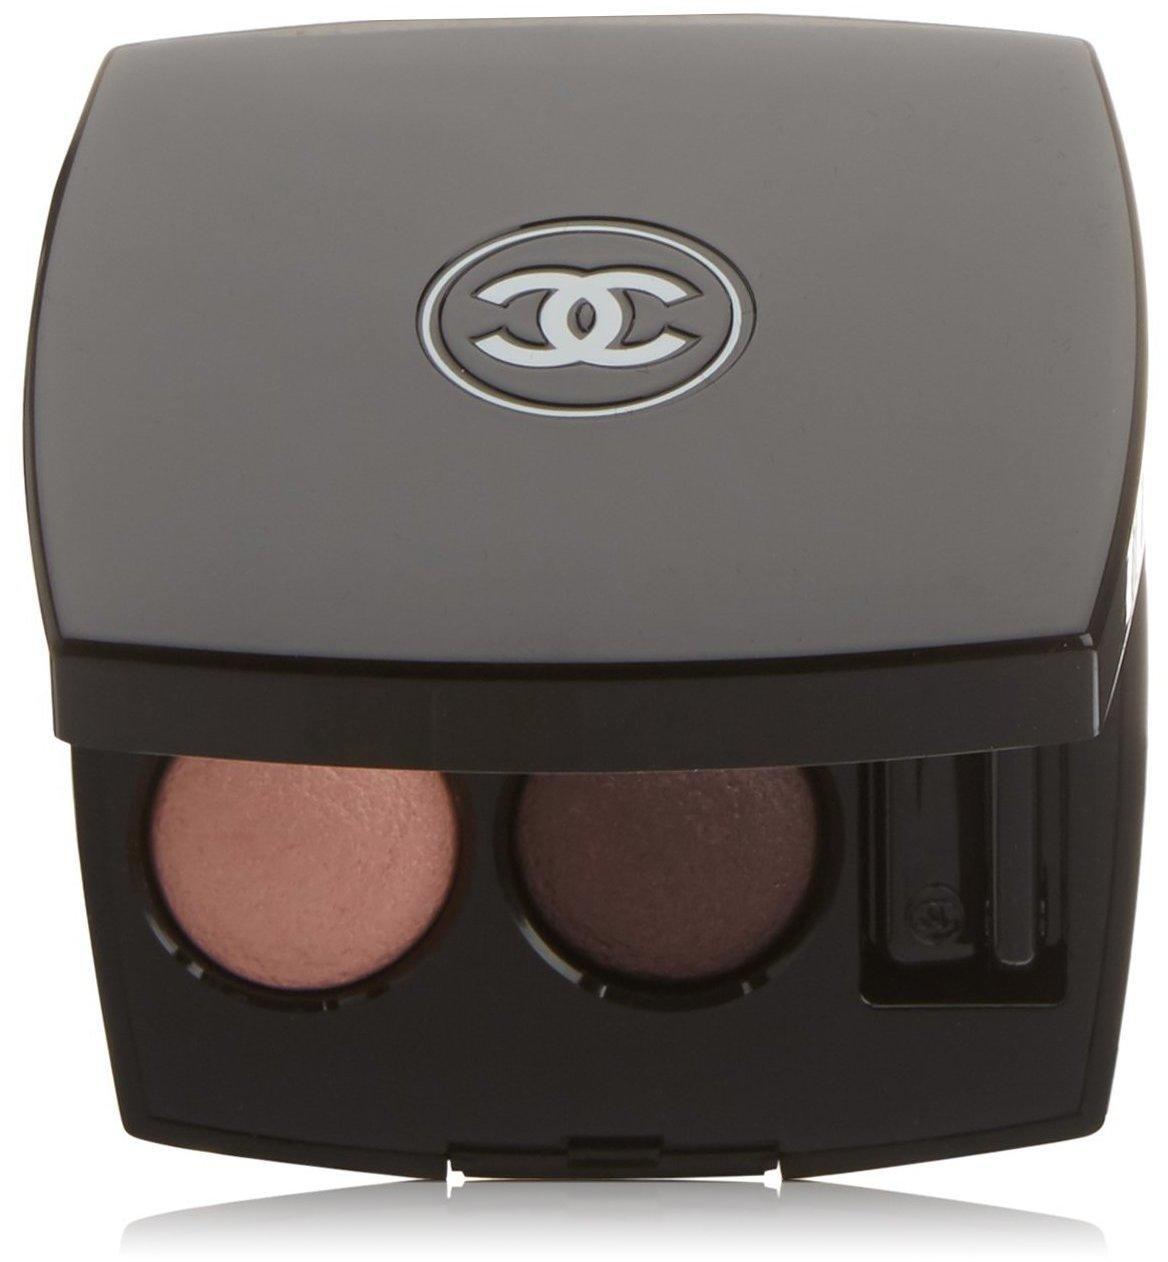 Chanel Les 4 Ombres eyeshadow palette in # 202 Tissé Camélia – blushnglow